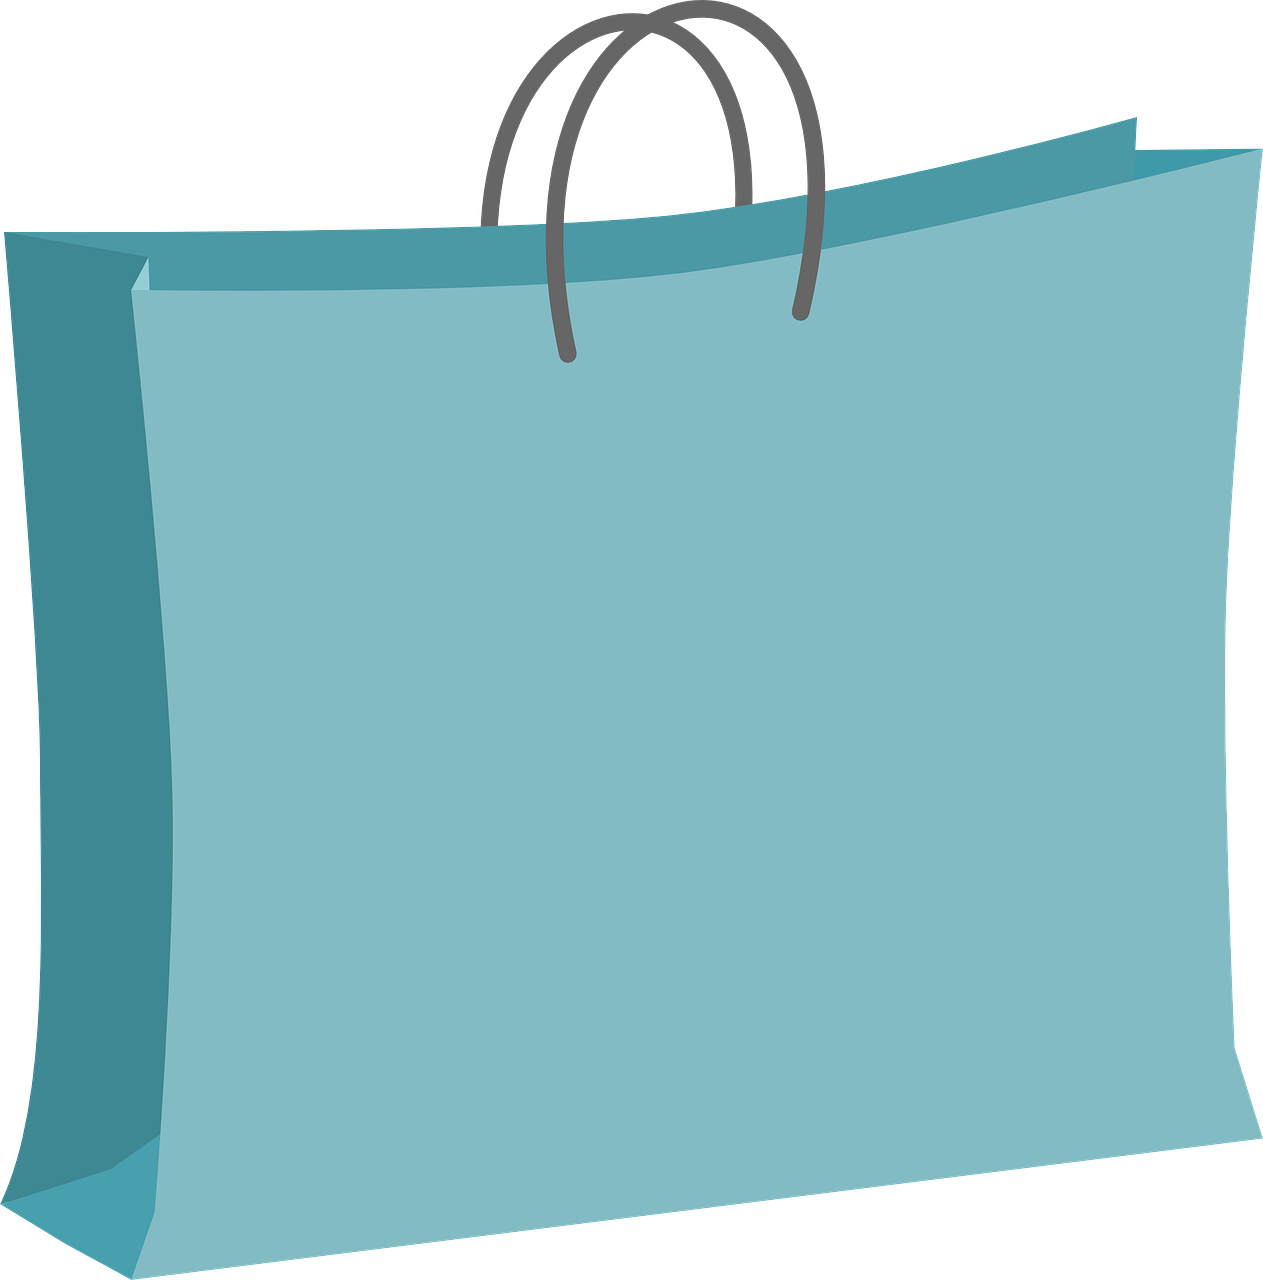 Free to Use & Public Domain Shopping Bag Clip Art